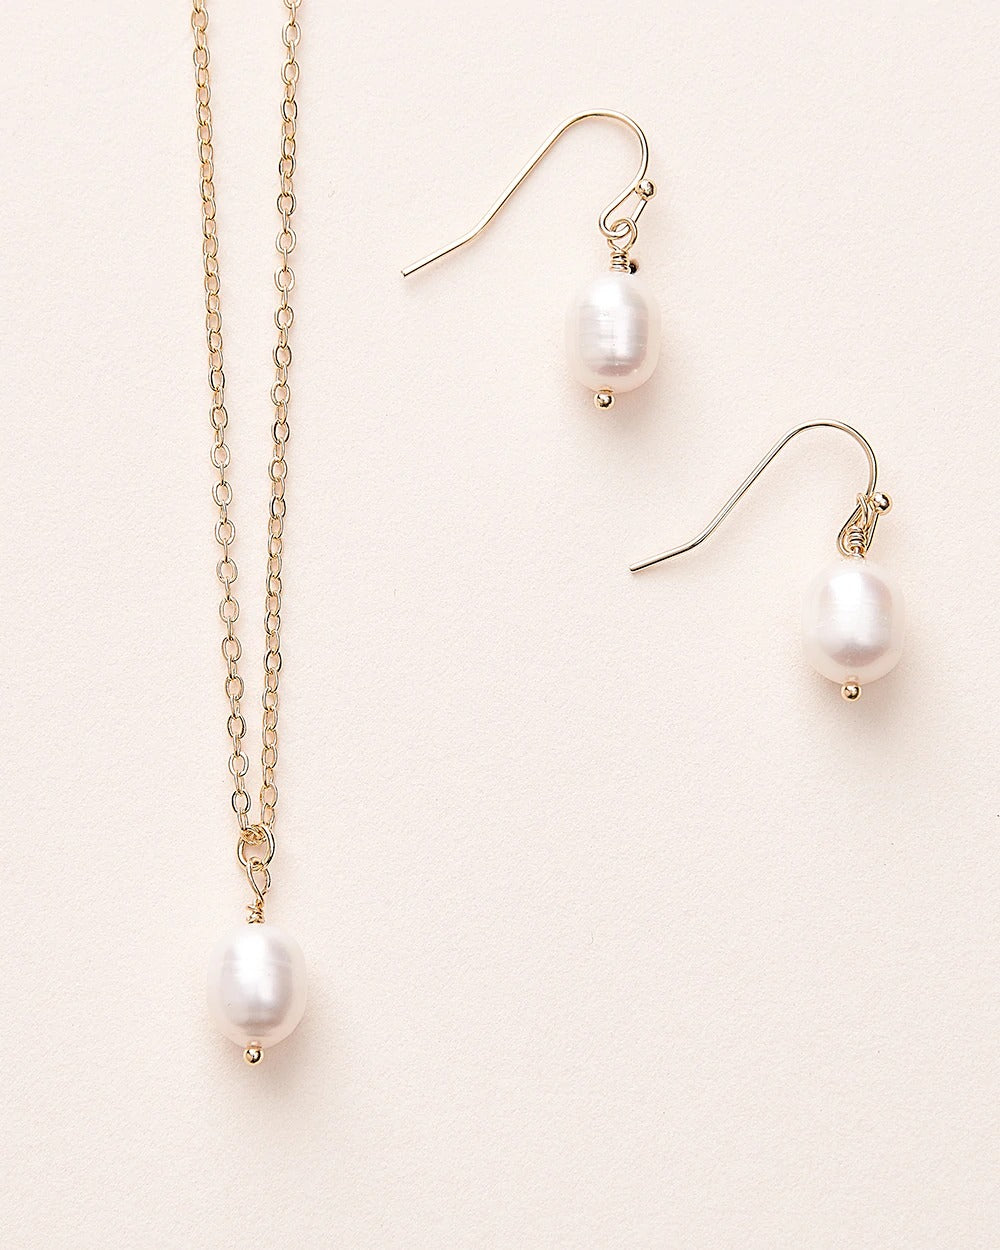 Details of Simple Pearl Drop Jewelry Set by Dareth Colburn